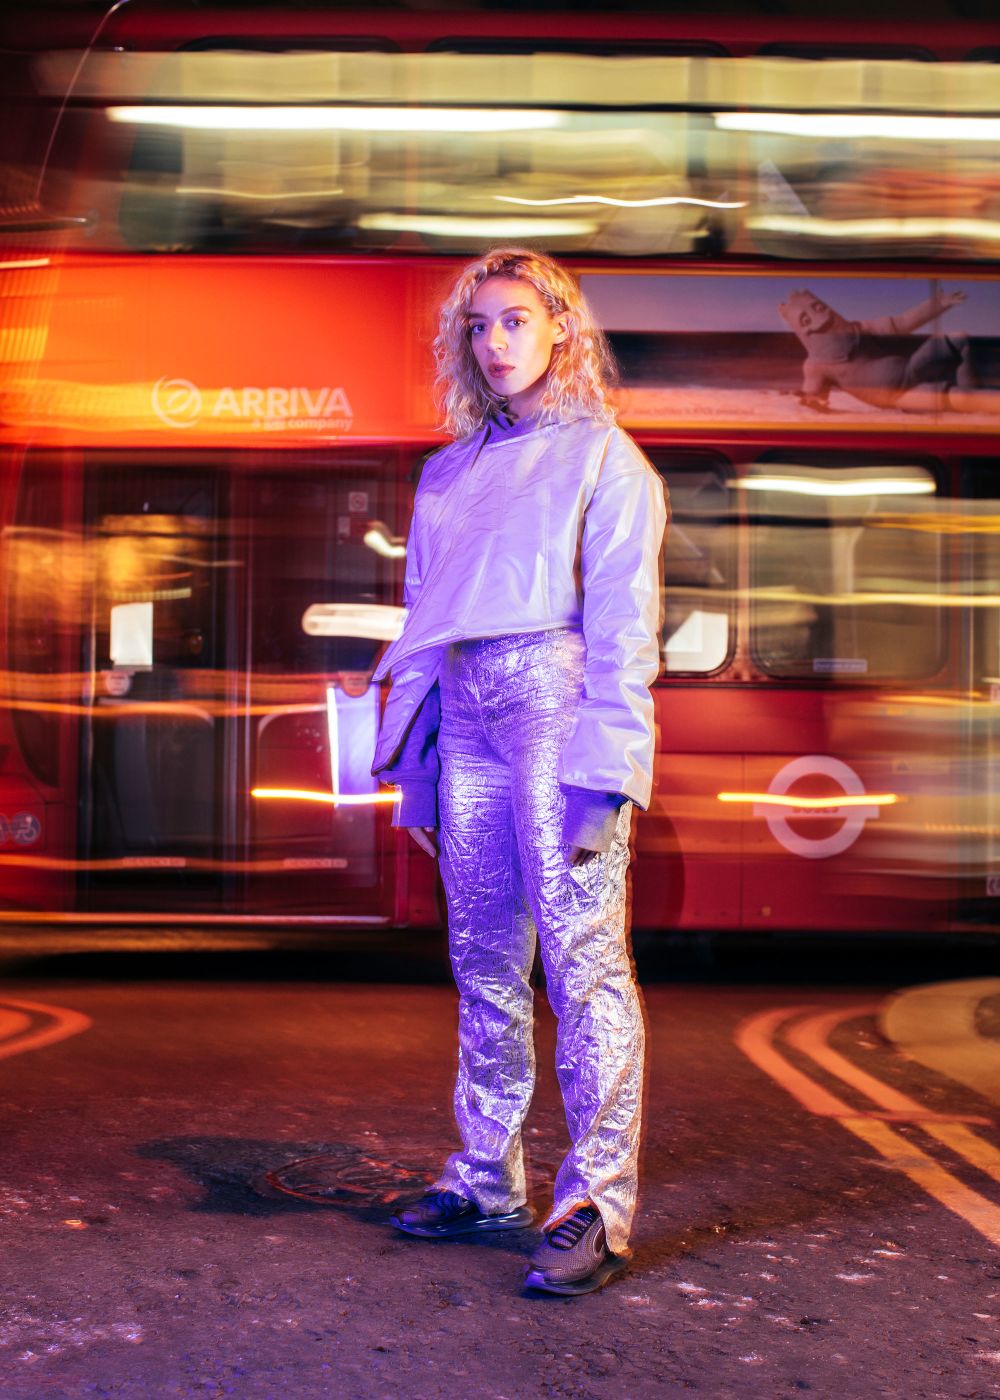 designer lisa keane in reflective outfit she designed